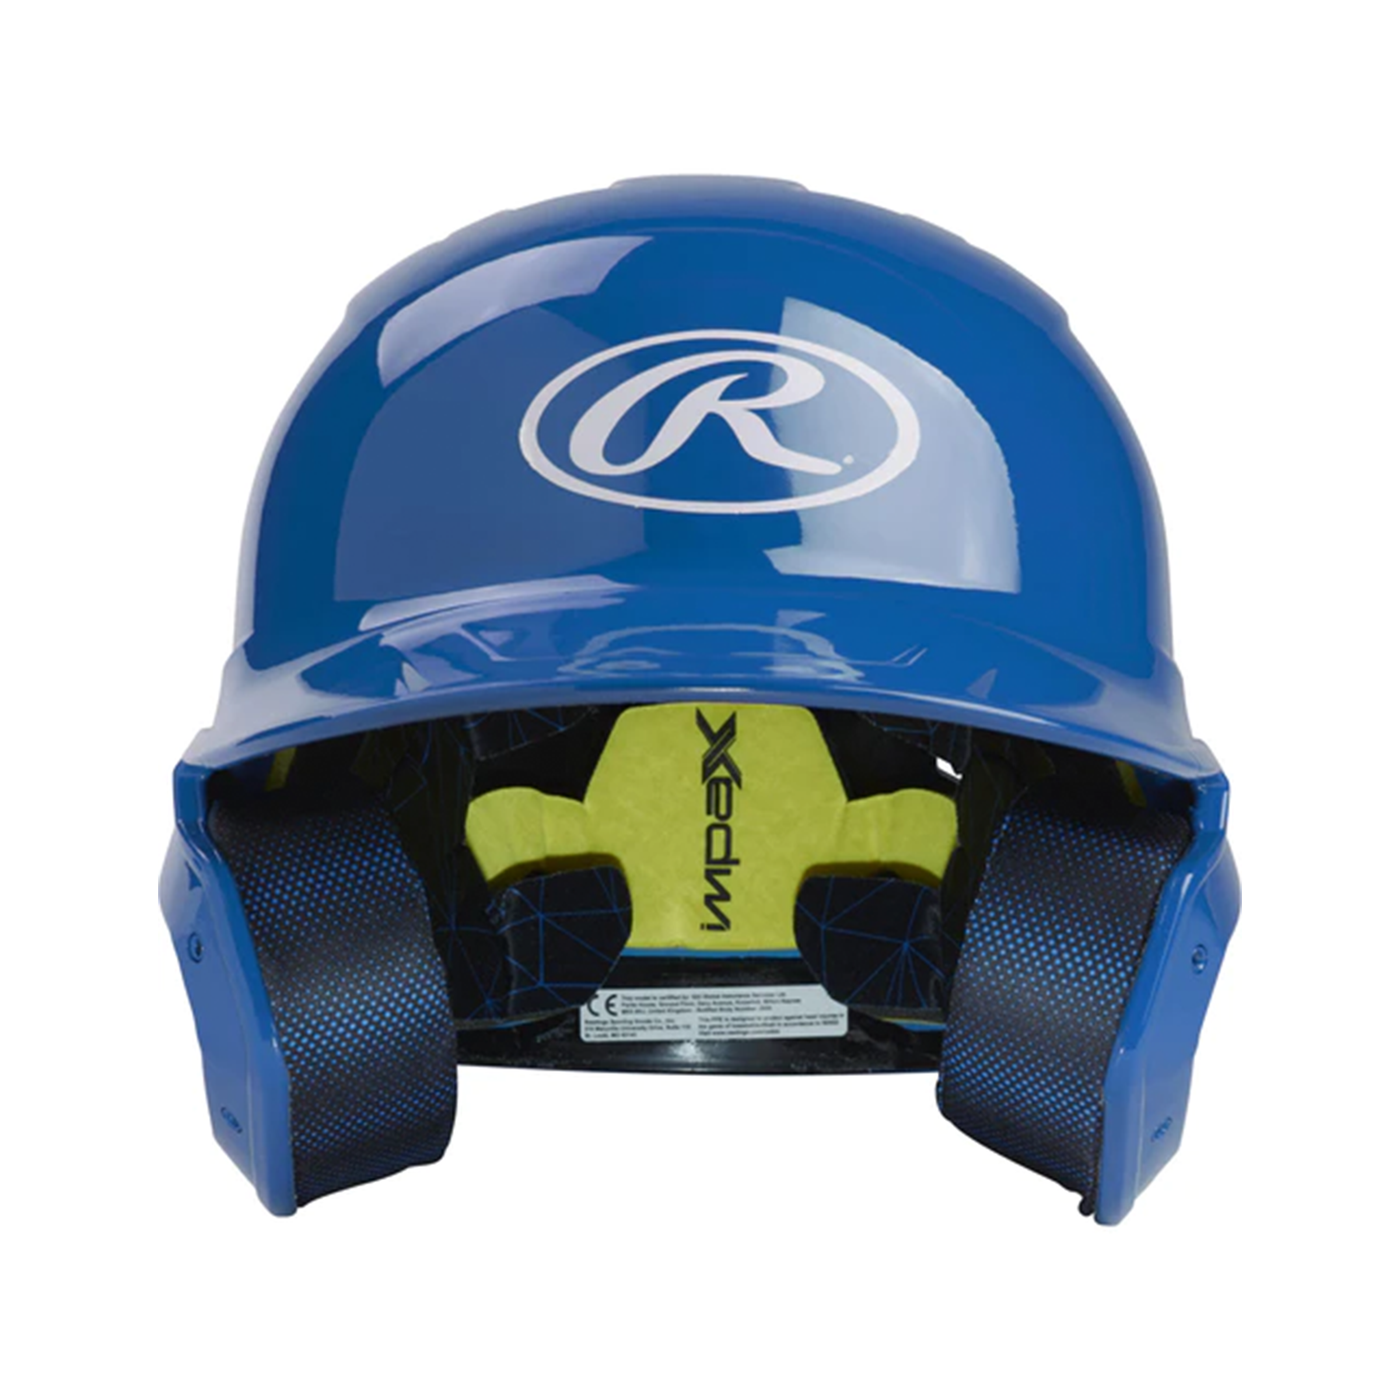 Rawlings Mach Gloss SR Helmet